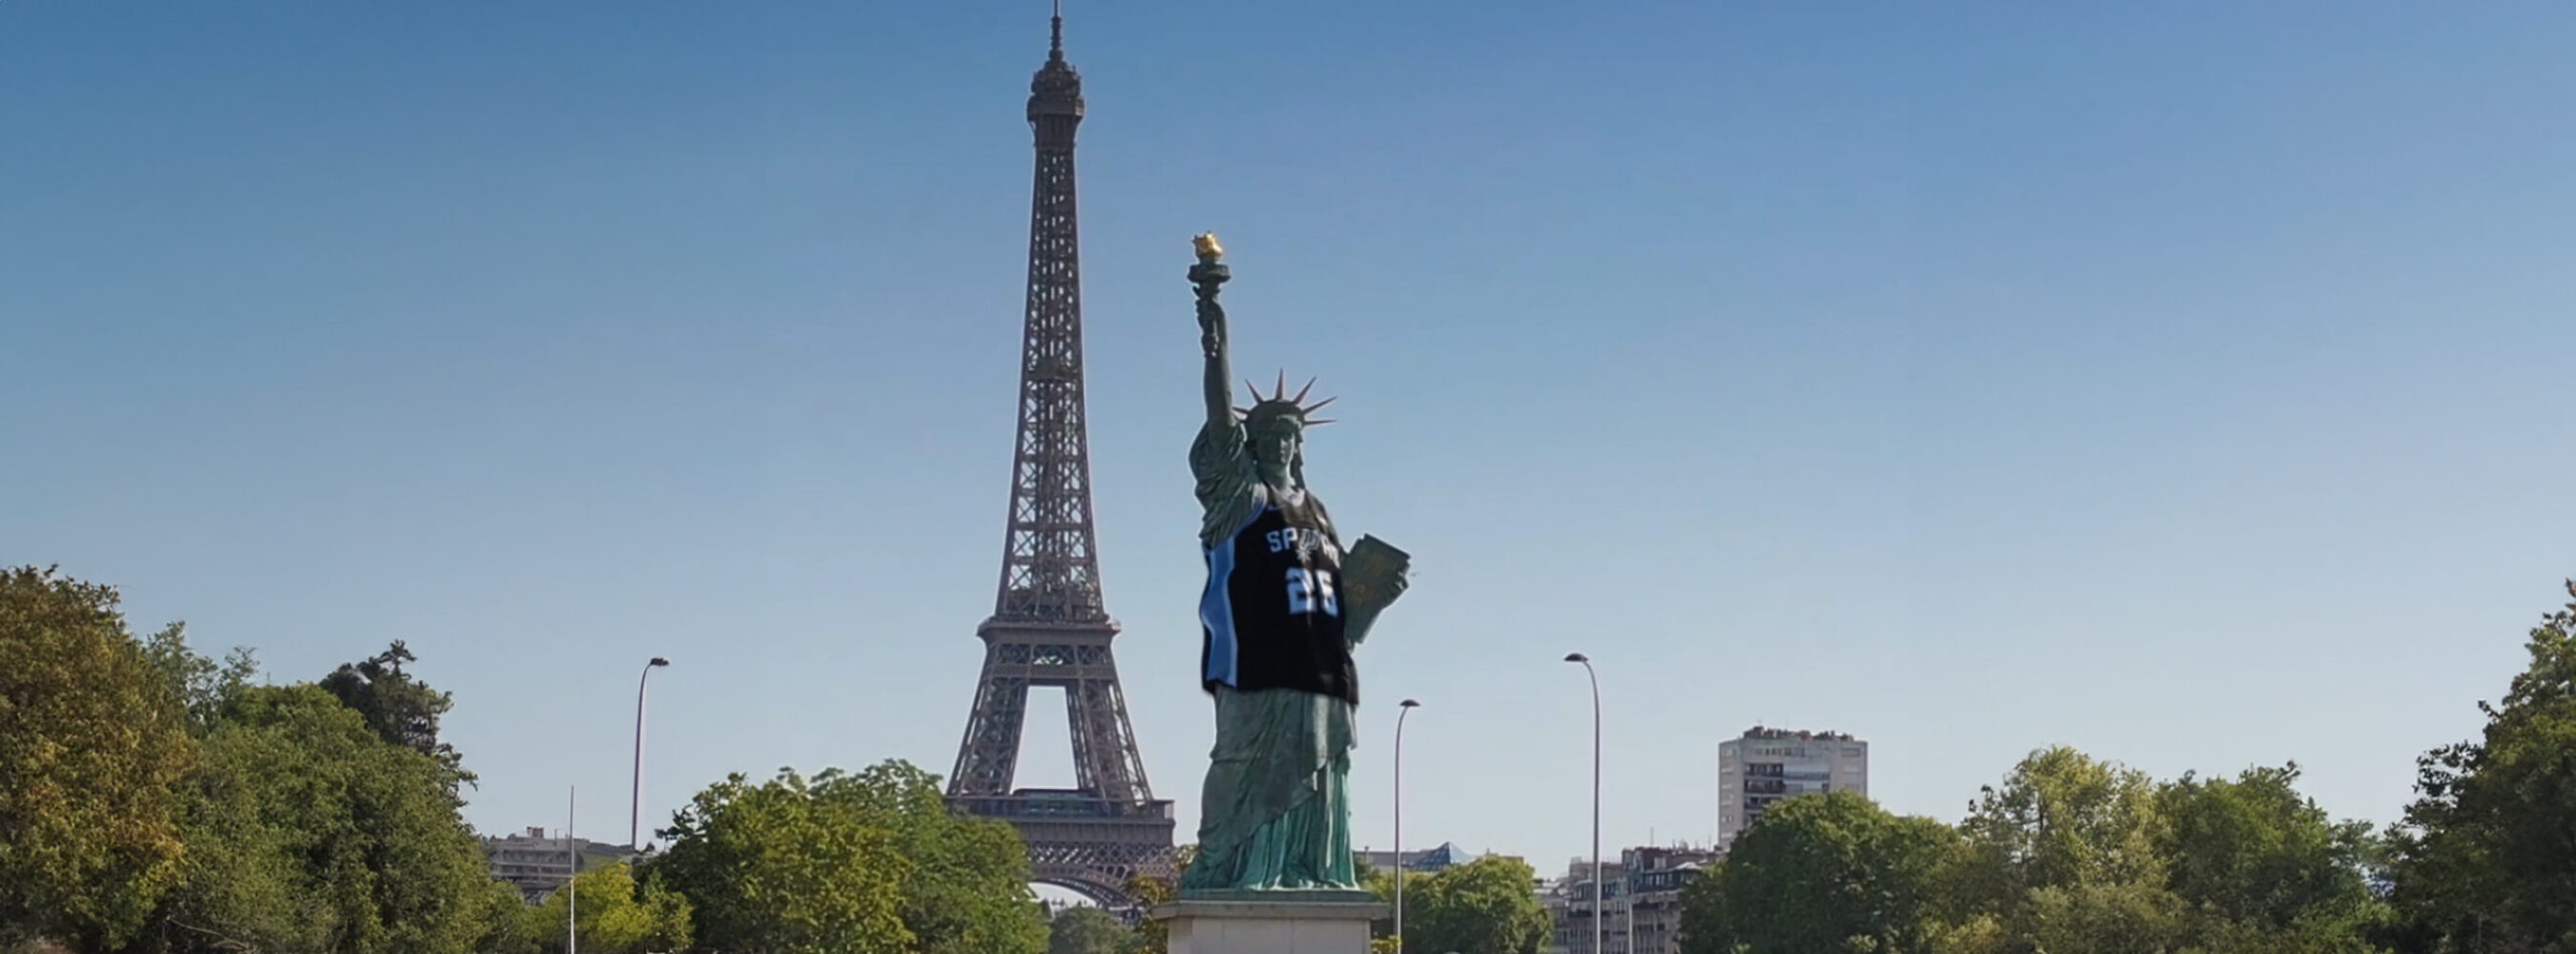 NBA – Paris 2025 Fake Out of Home